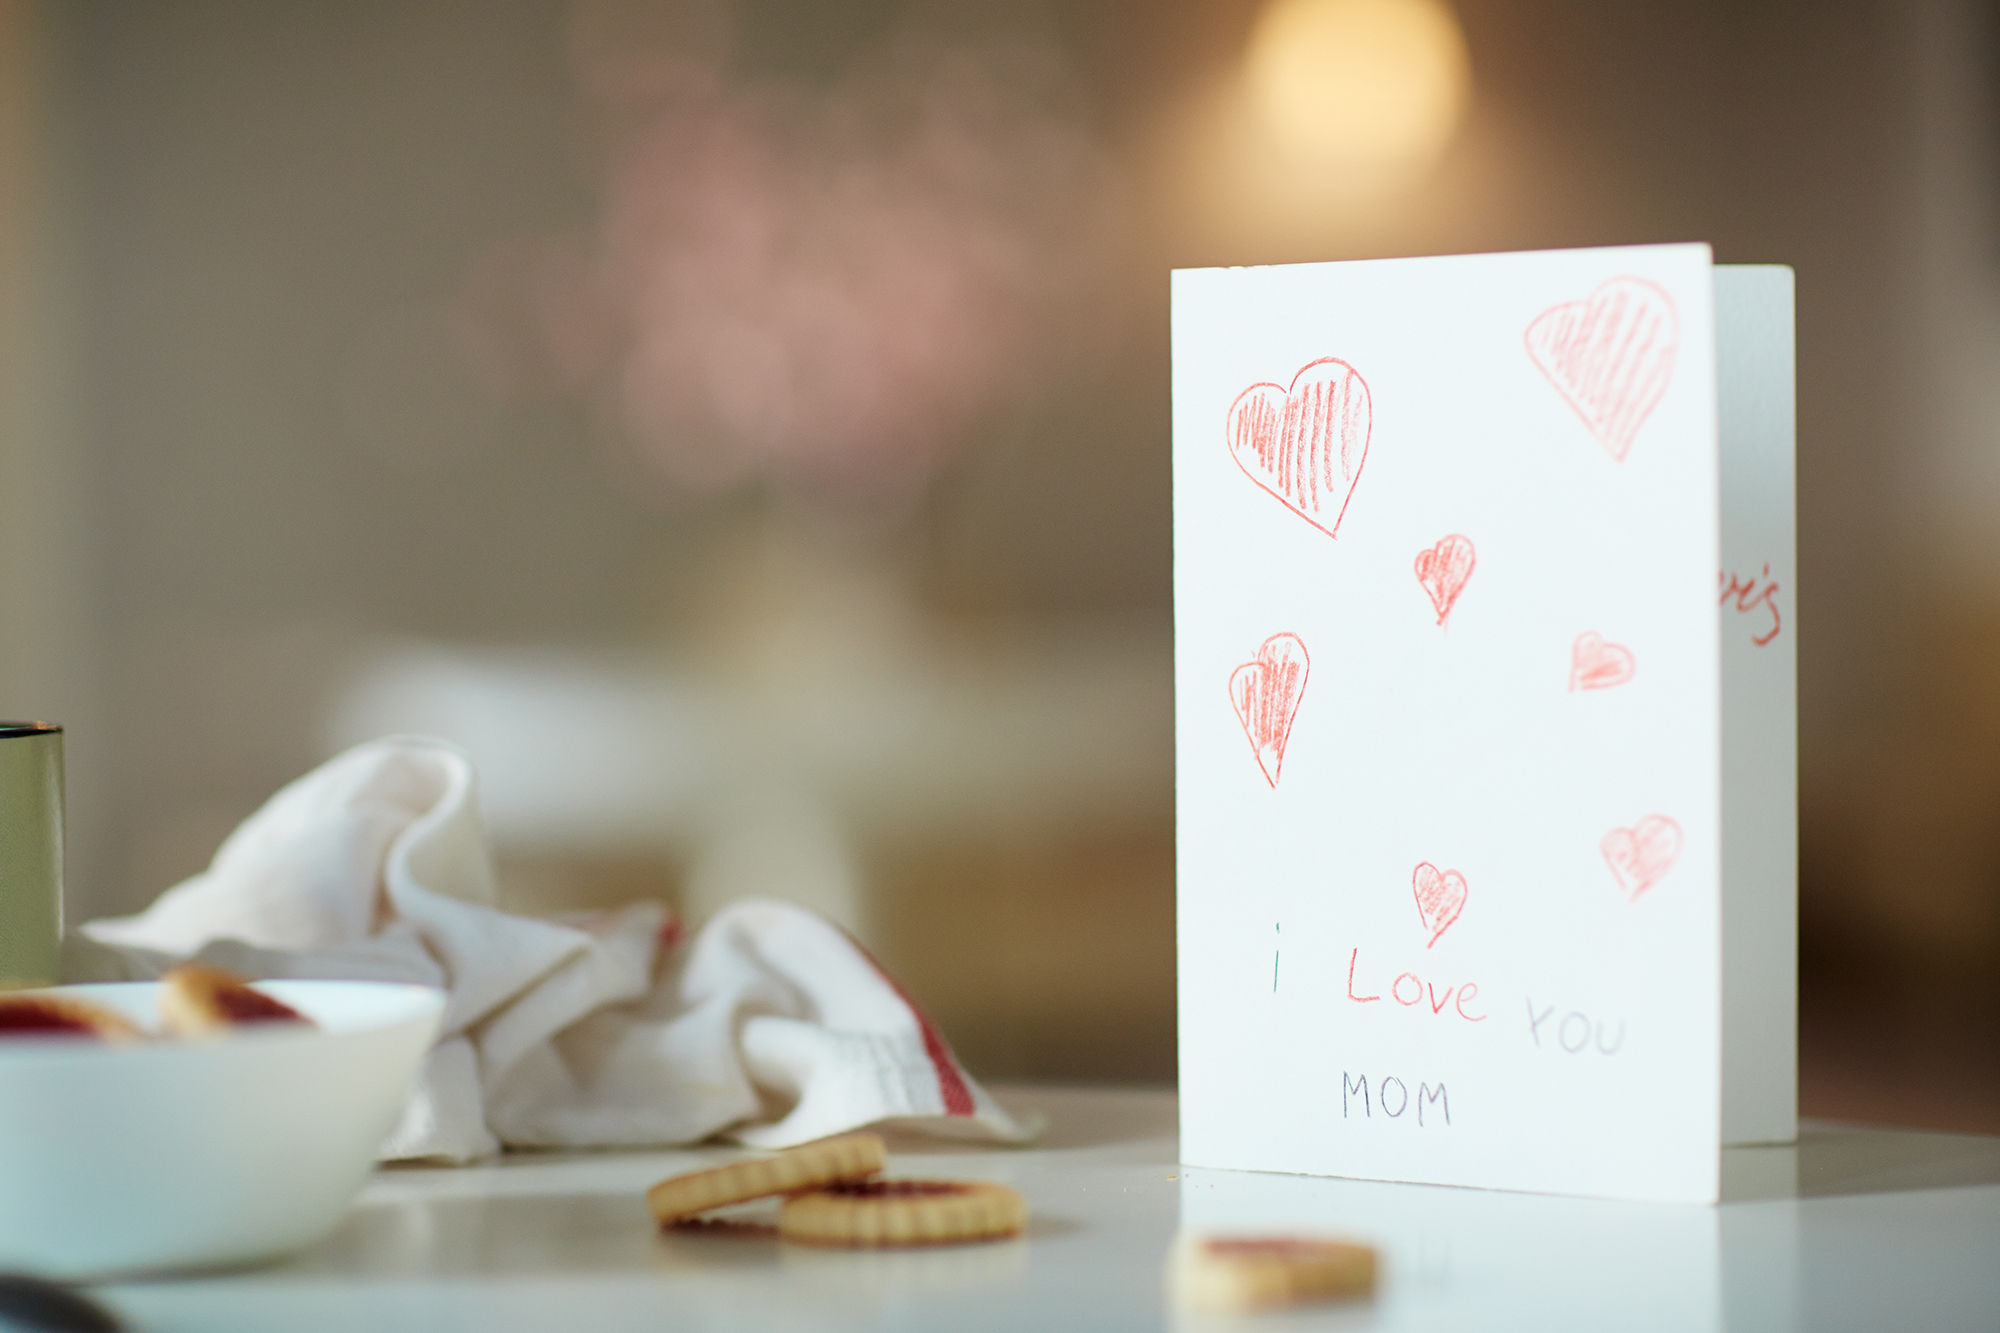 handmade card that says "I love you, mom"